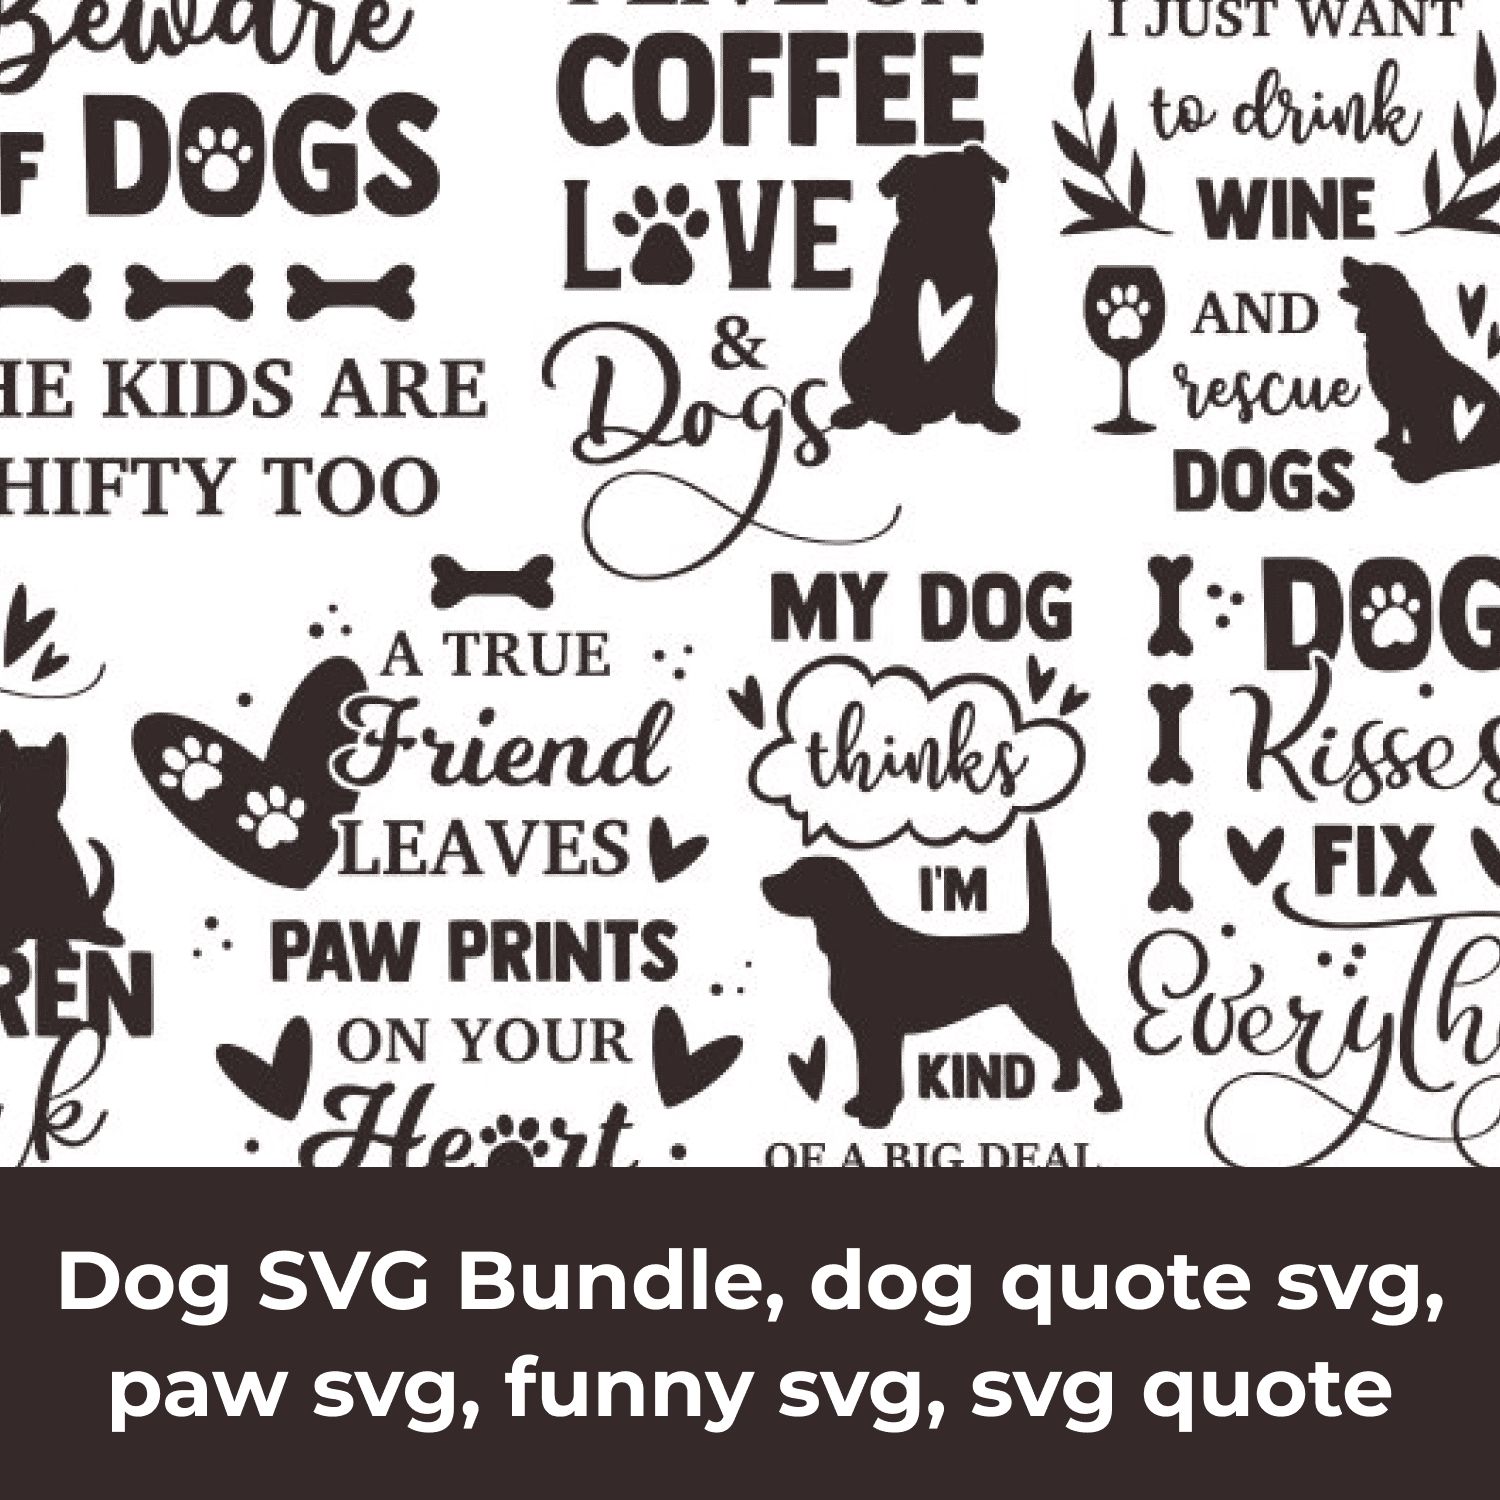 Dog SVG Bundle, dog quote svg, paw svg, funny svg, svg quote cover image.